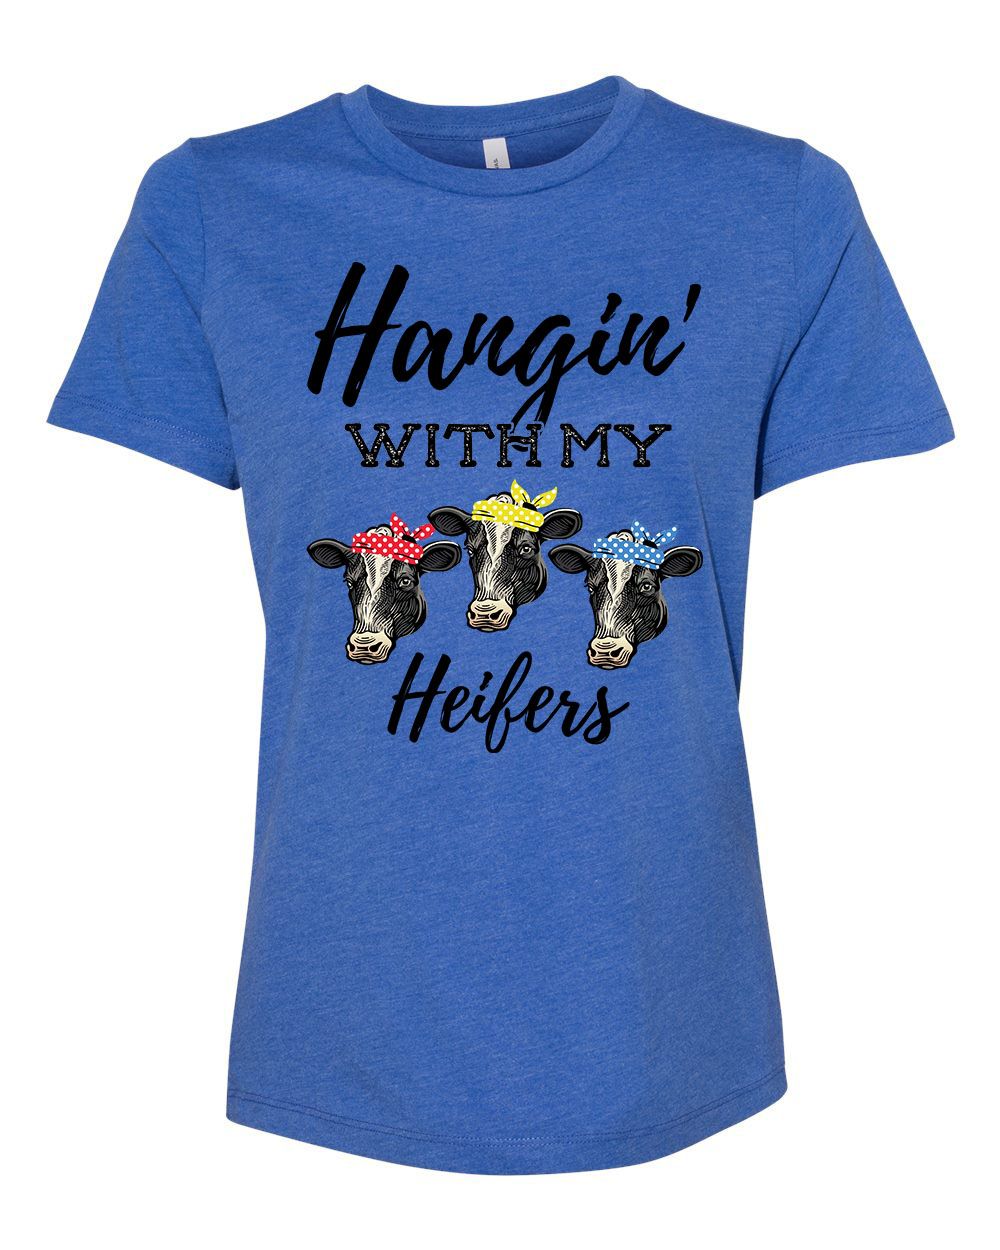 Women's Cow Bandana Hangin With My Heifers Ladies Fit Short Sleeve T-shirt | Walmart (US)